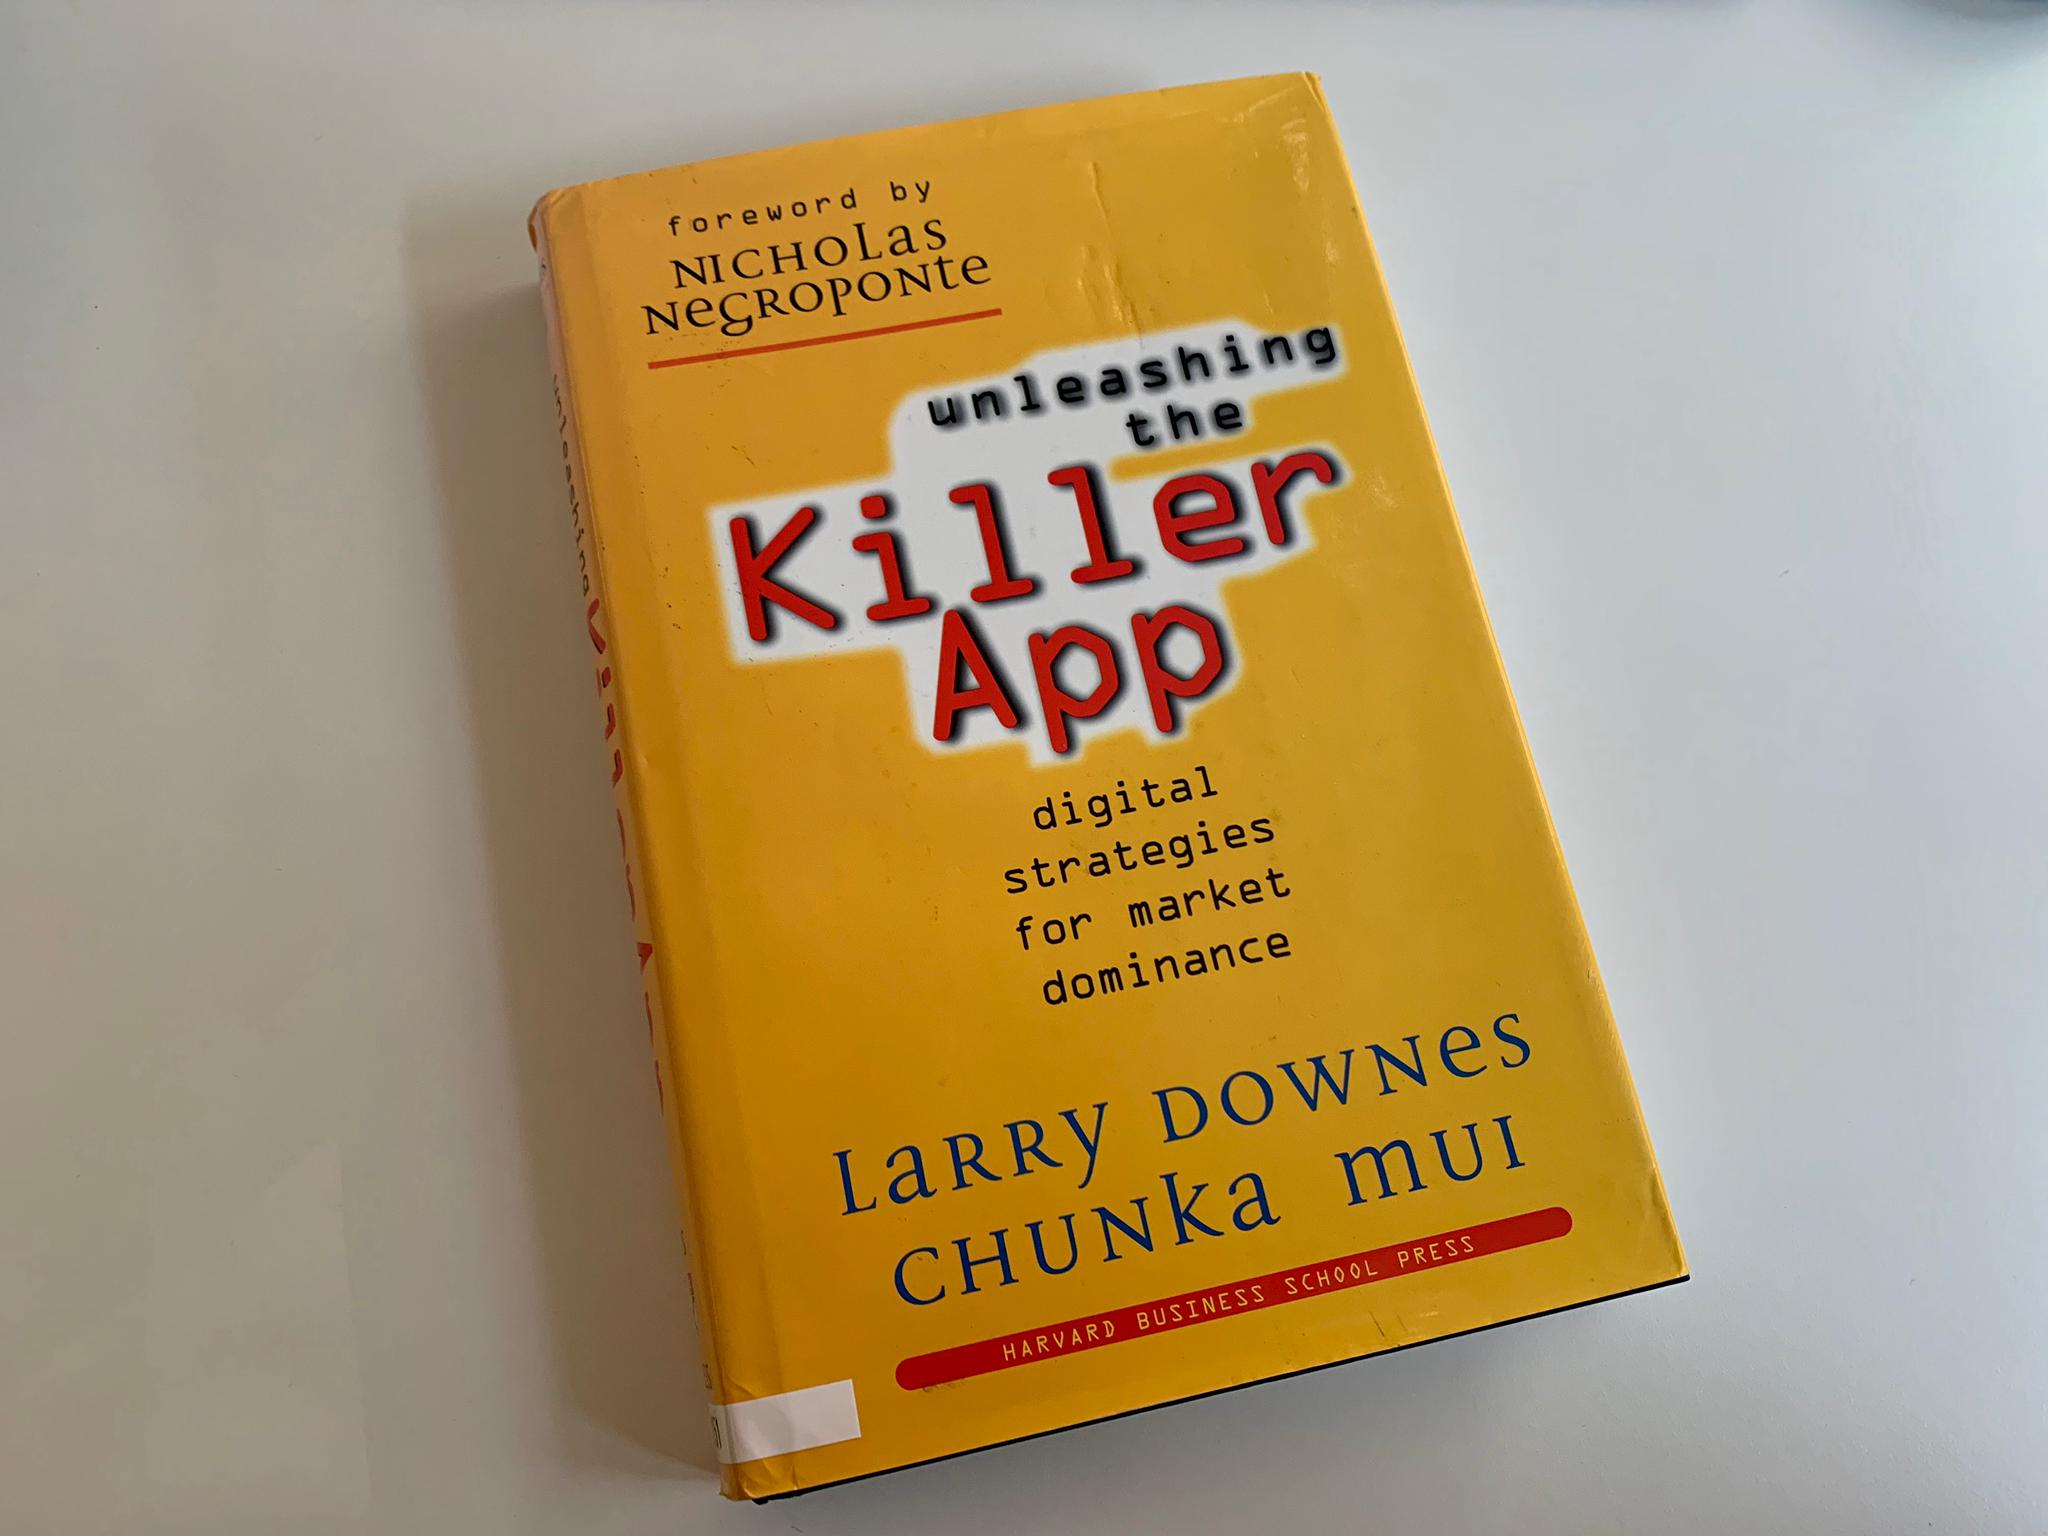 Unleashing the killer app